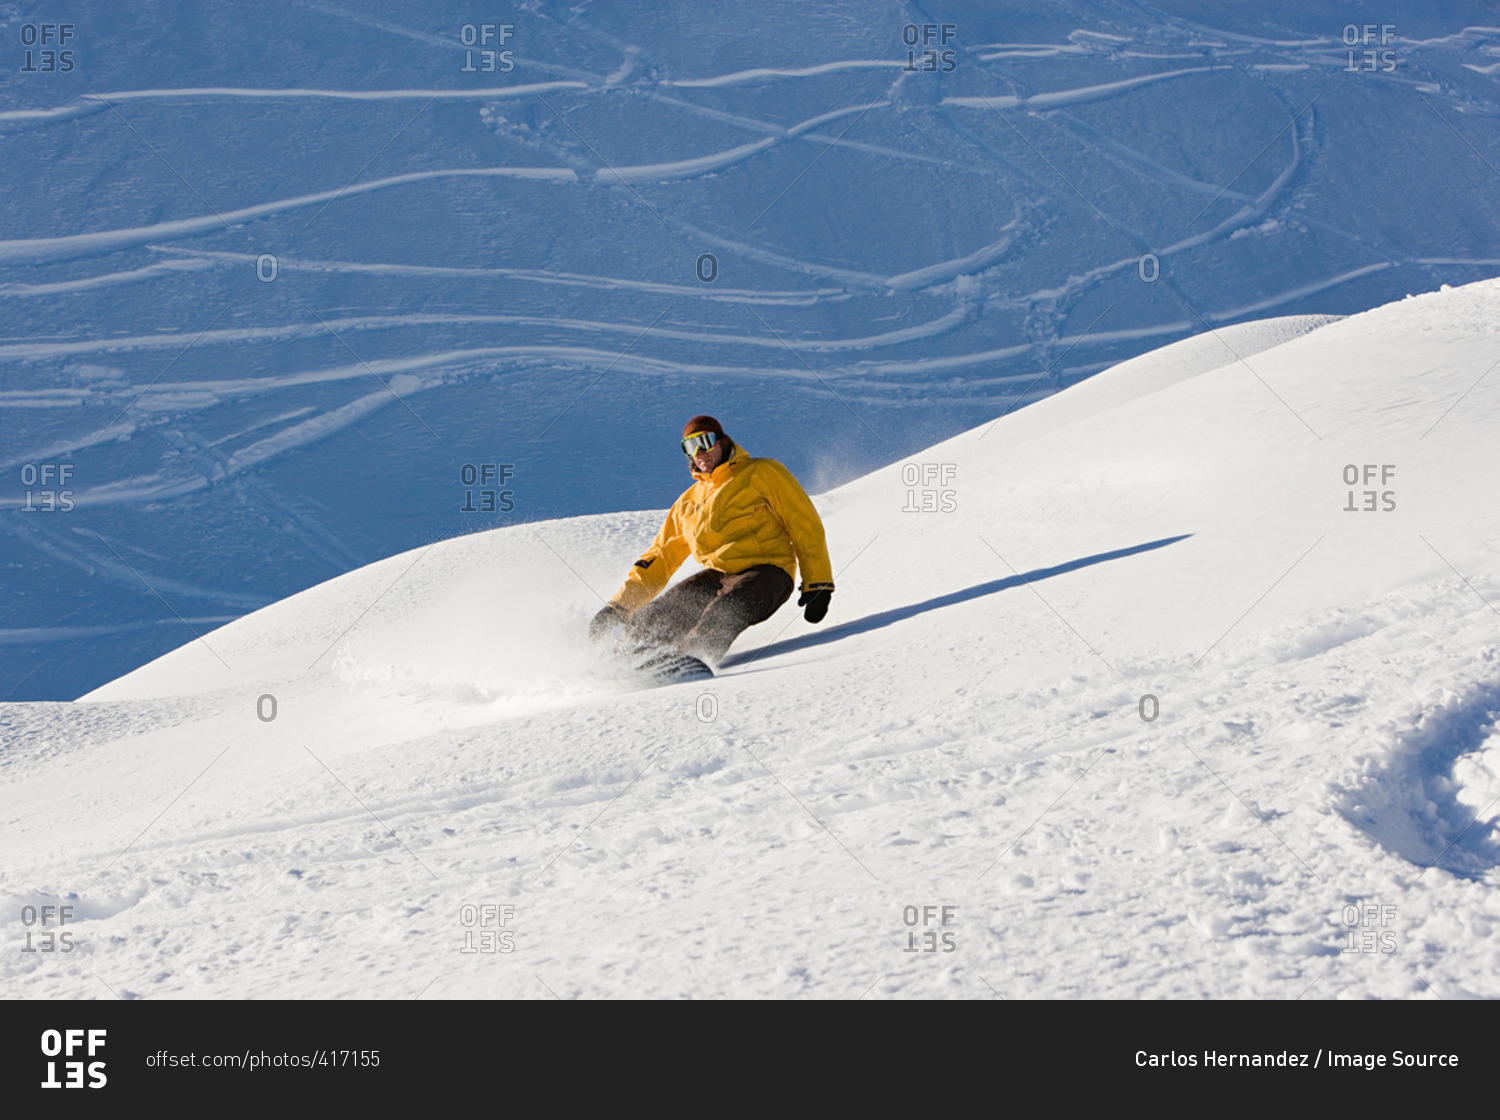 A man snowboarding